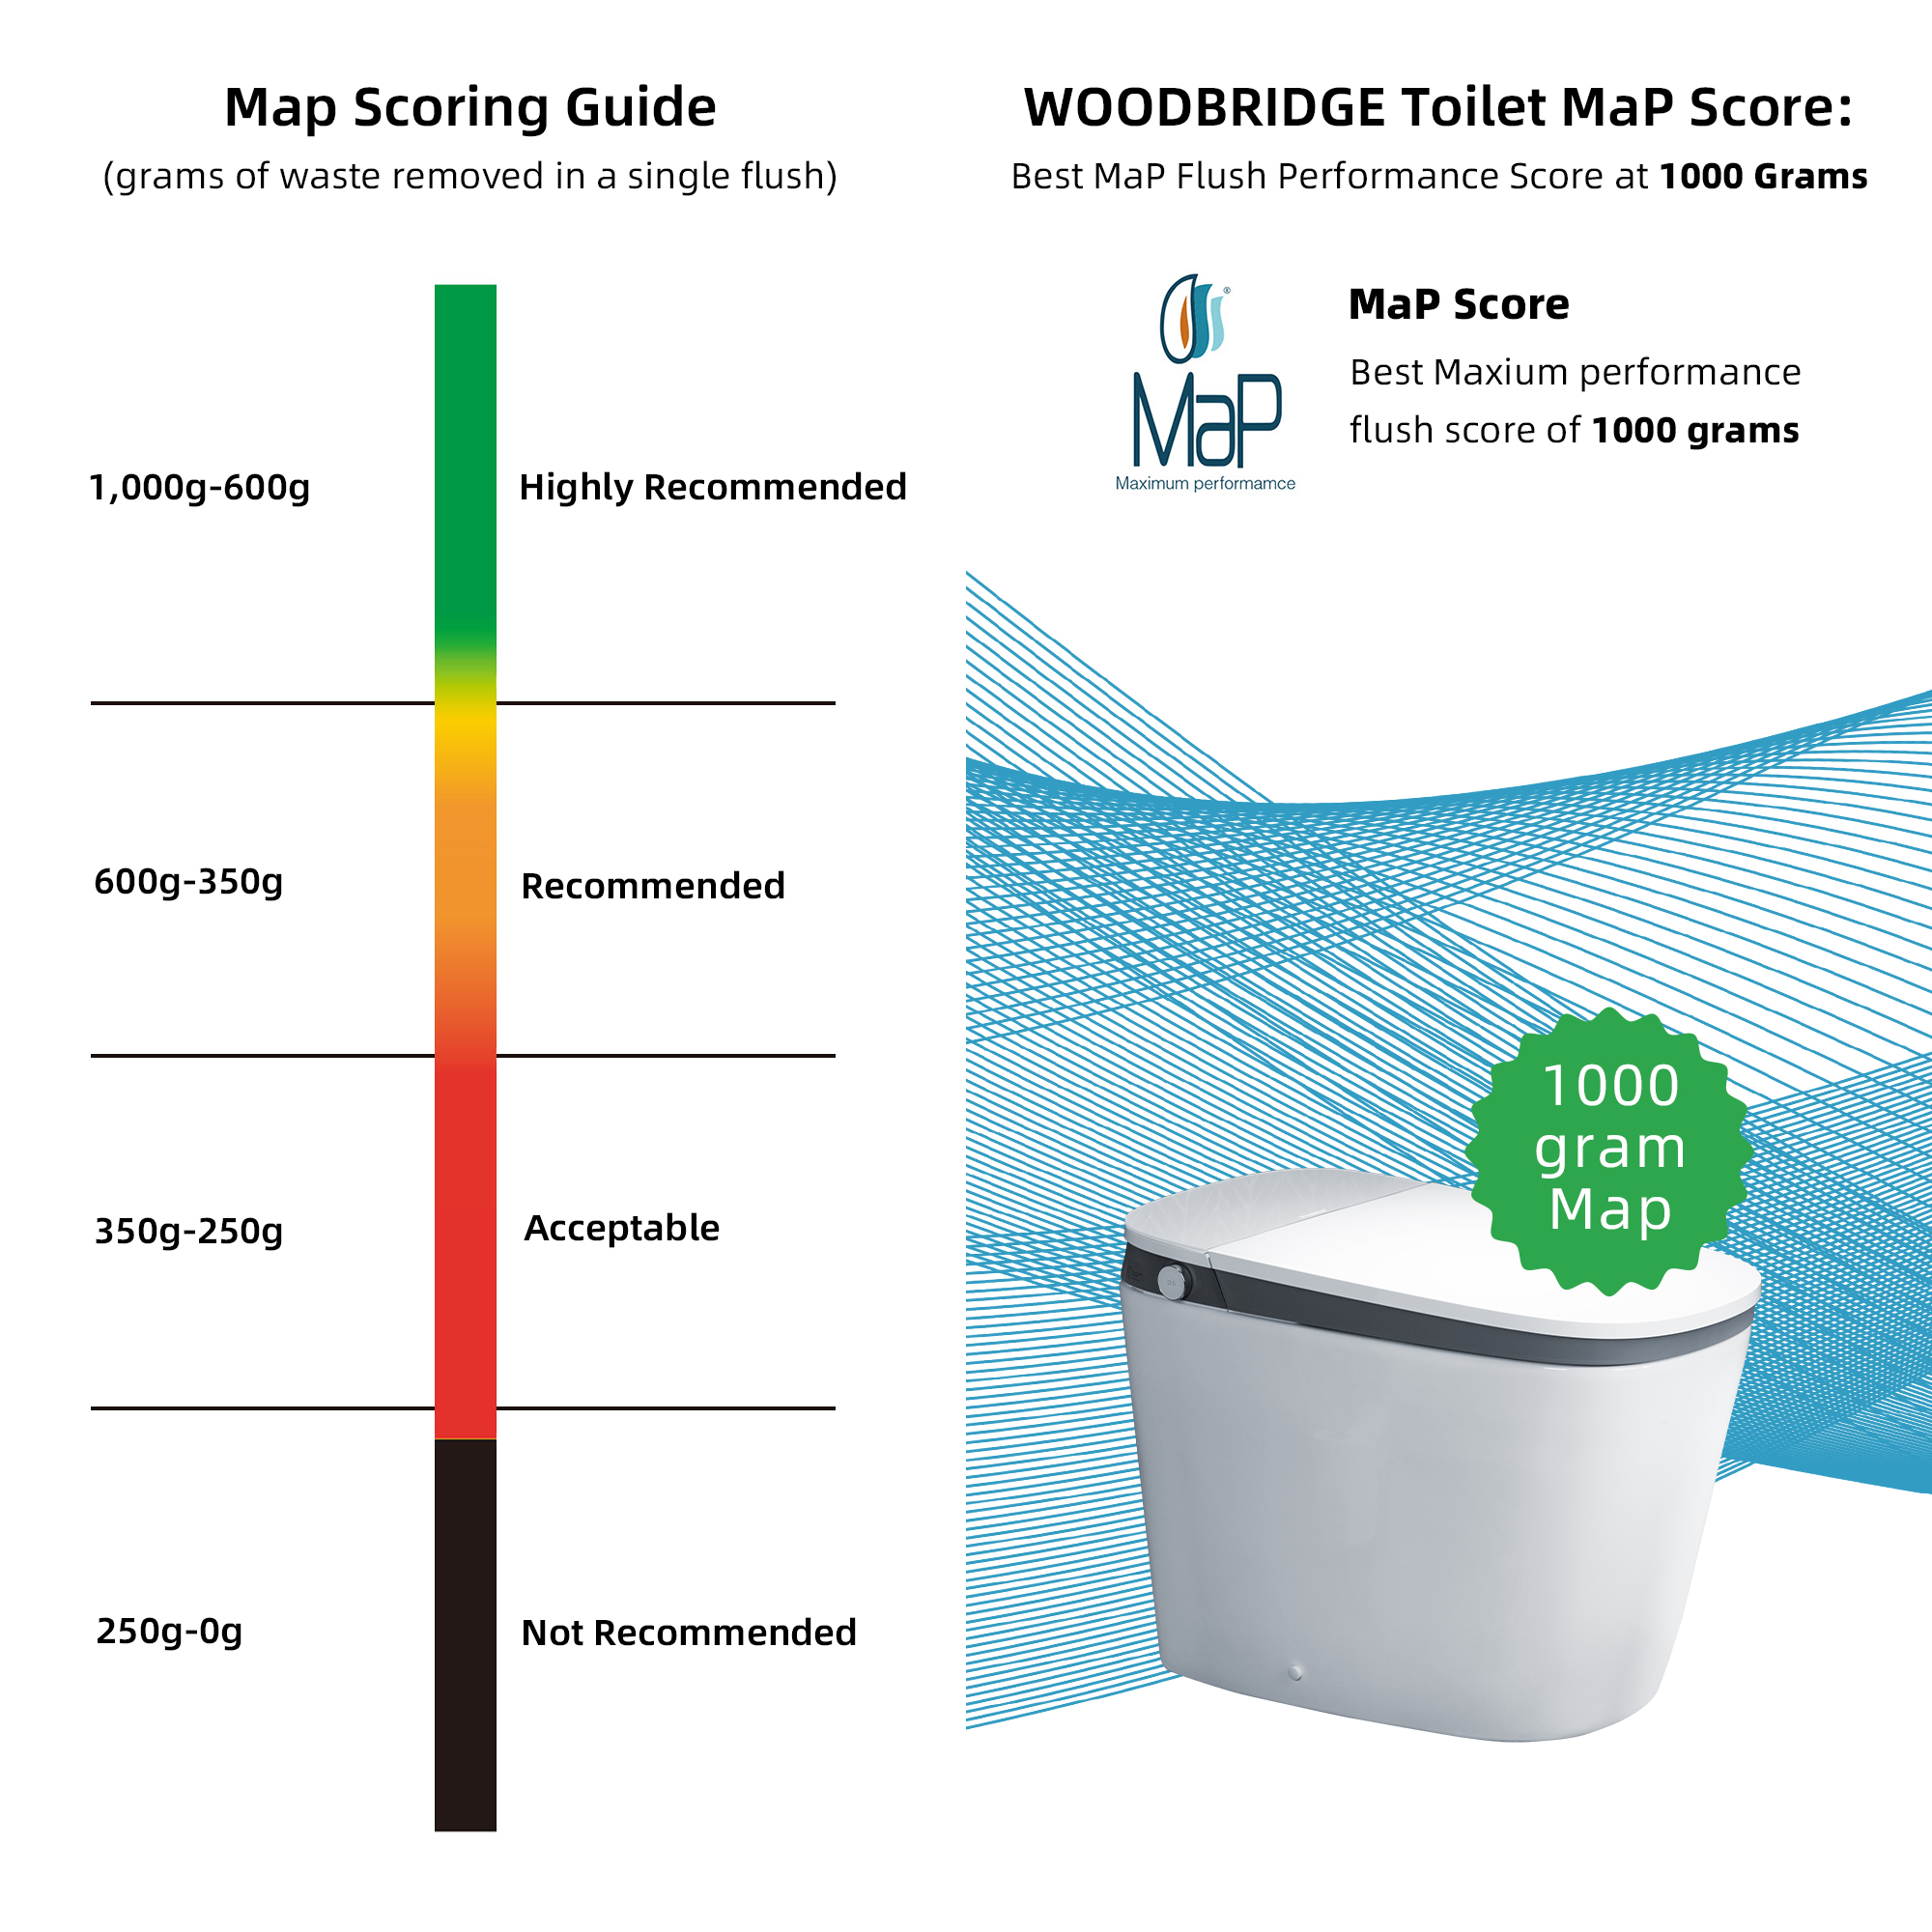  WOODBRIDGE B0931S Smart Bidet Toilet with 1.28 GPF Dual Flush Auto Open & Close, Foot Sensor Flush, Voice Control,1000 Gram Map Flushing Score, LED Display, Chair Height Design and Cleaning Foam Dispenser_14567